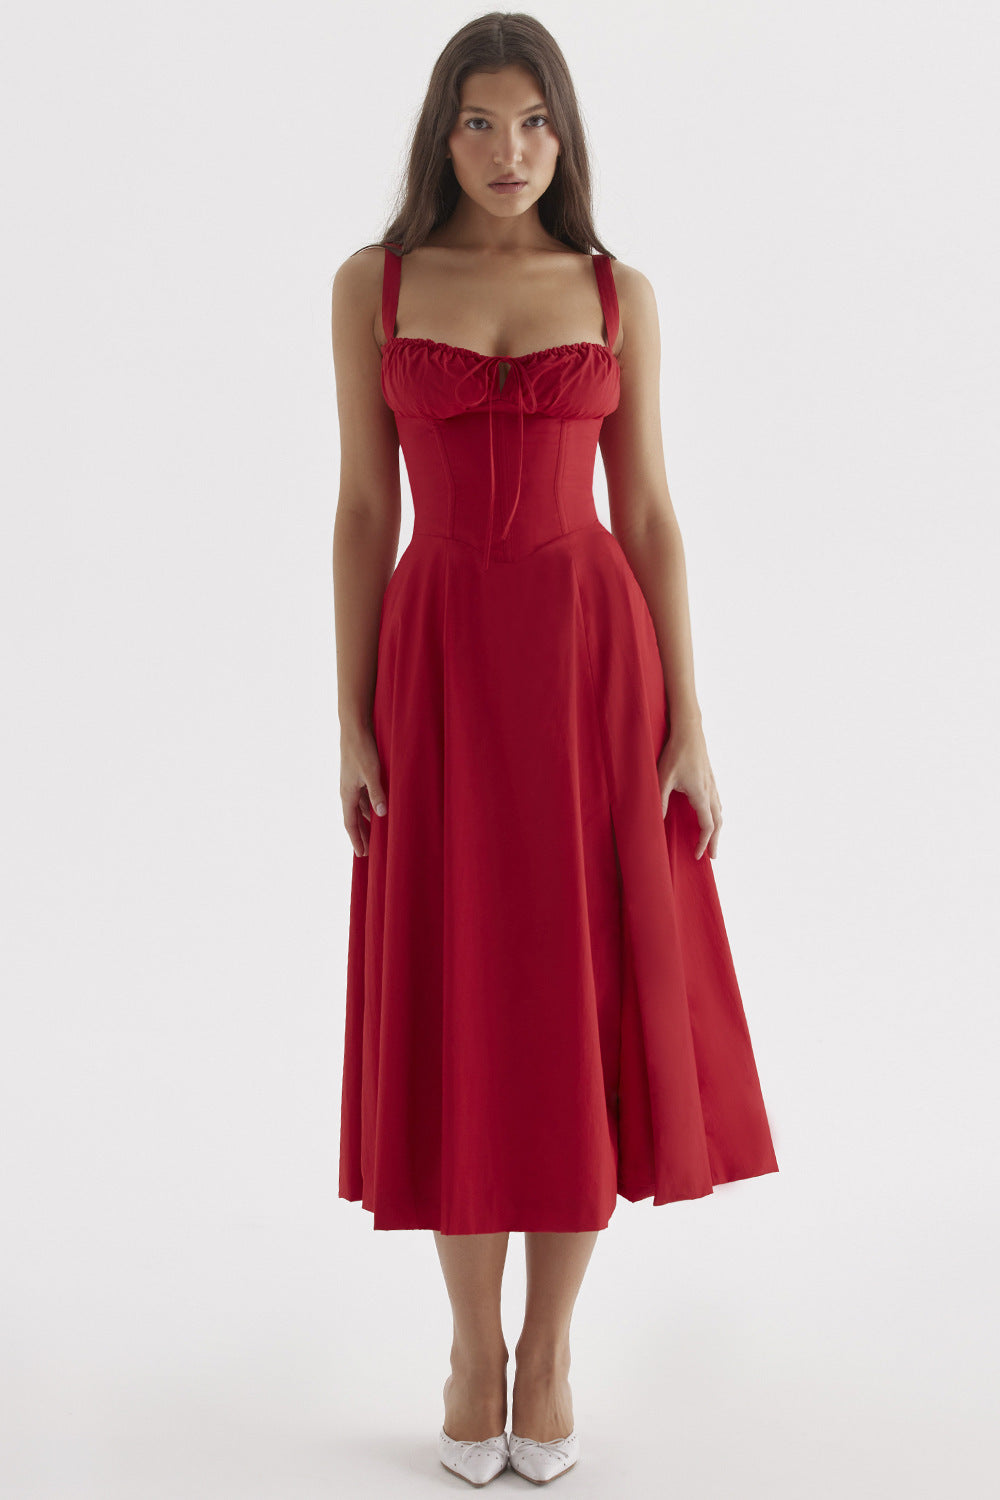 Hot Sale 49% OFF⏳Floral Bustier Midriff Waist Shaper Dress